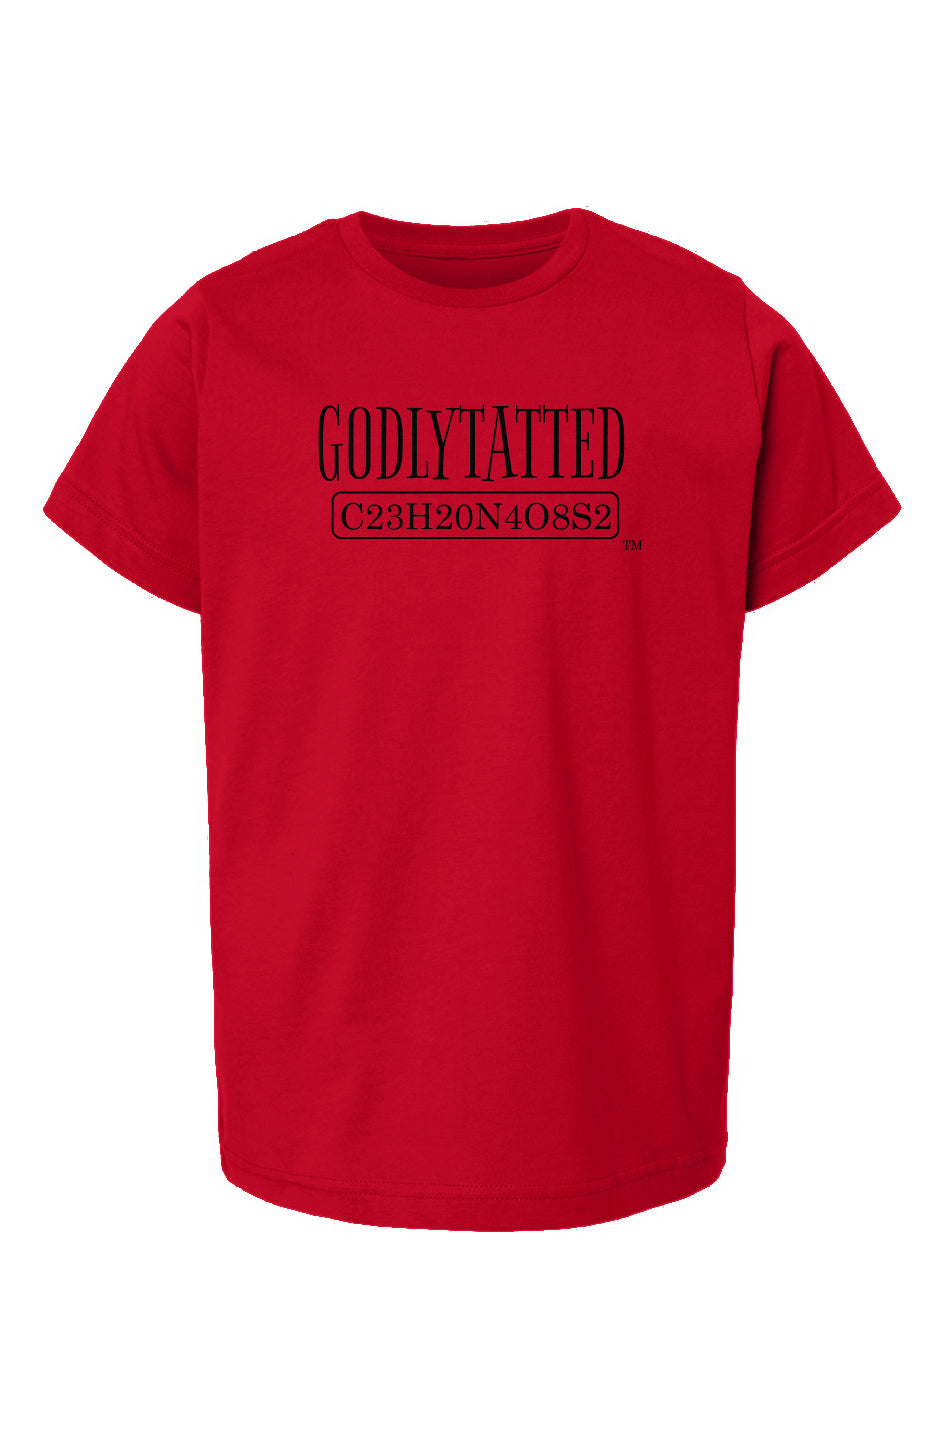 godlytatted - kids - Red - Black logo